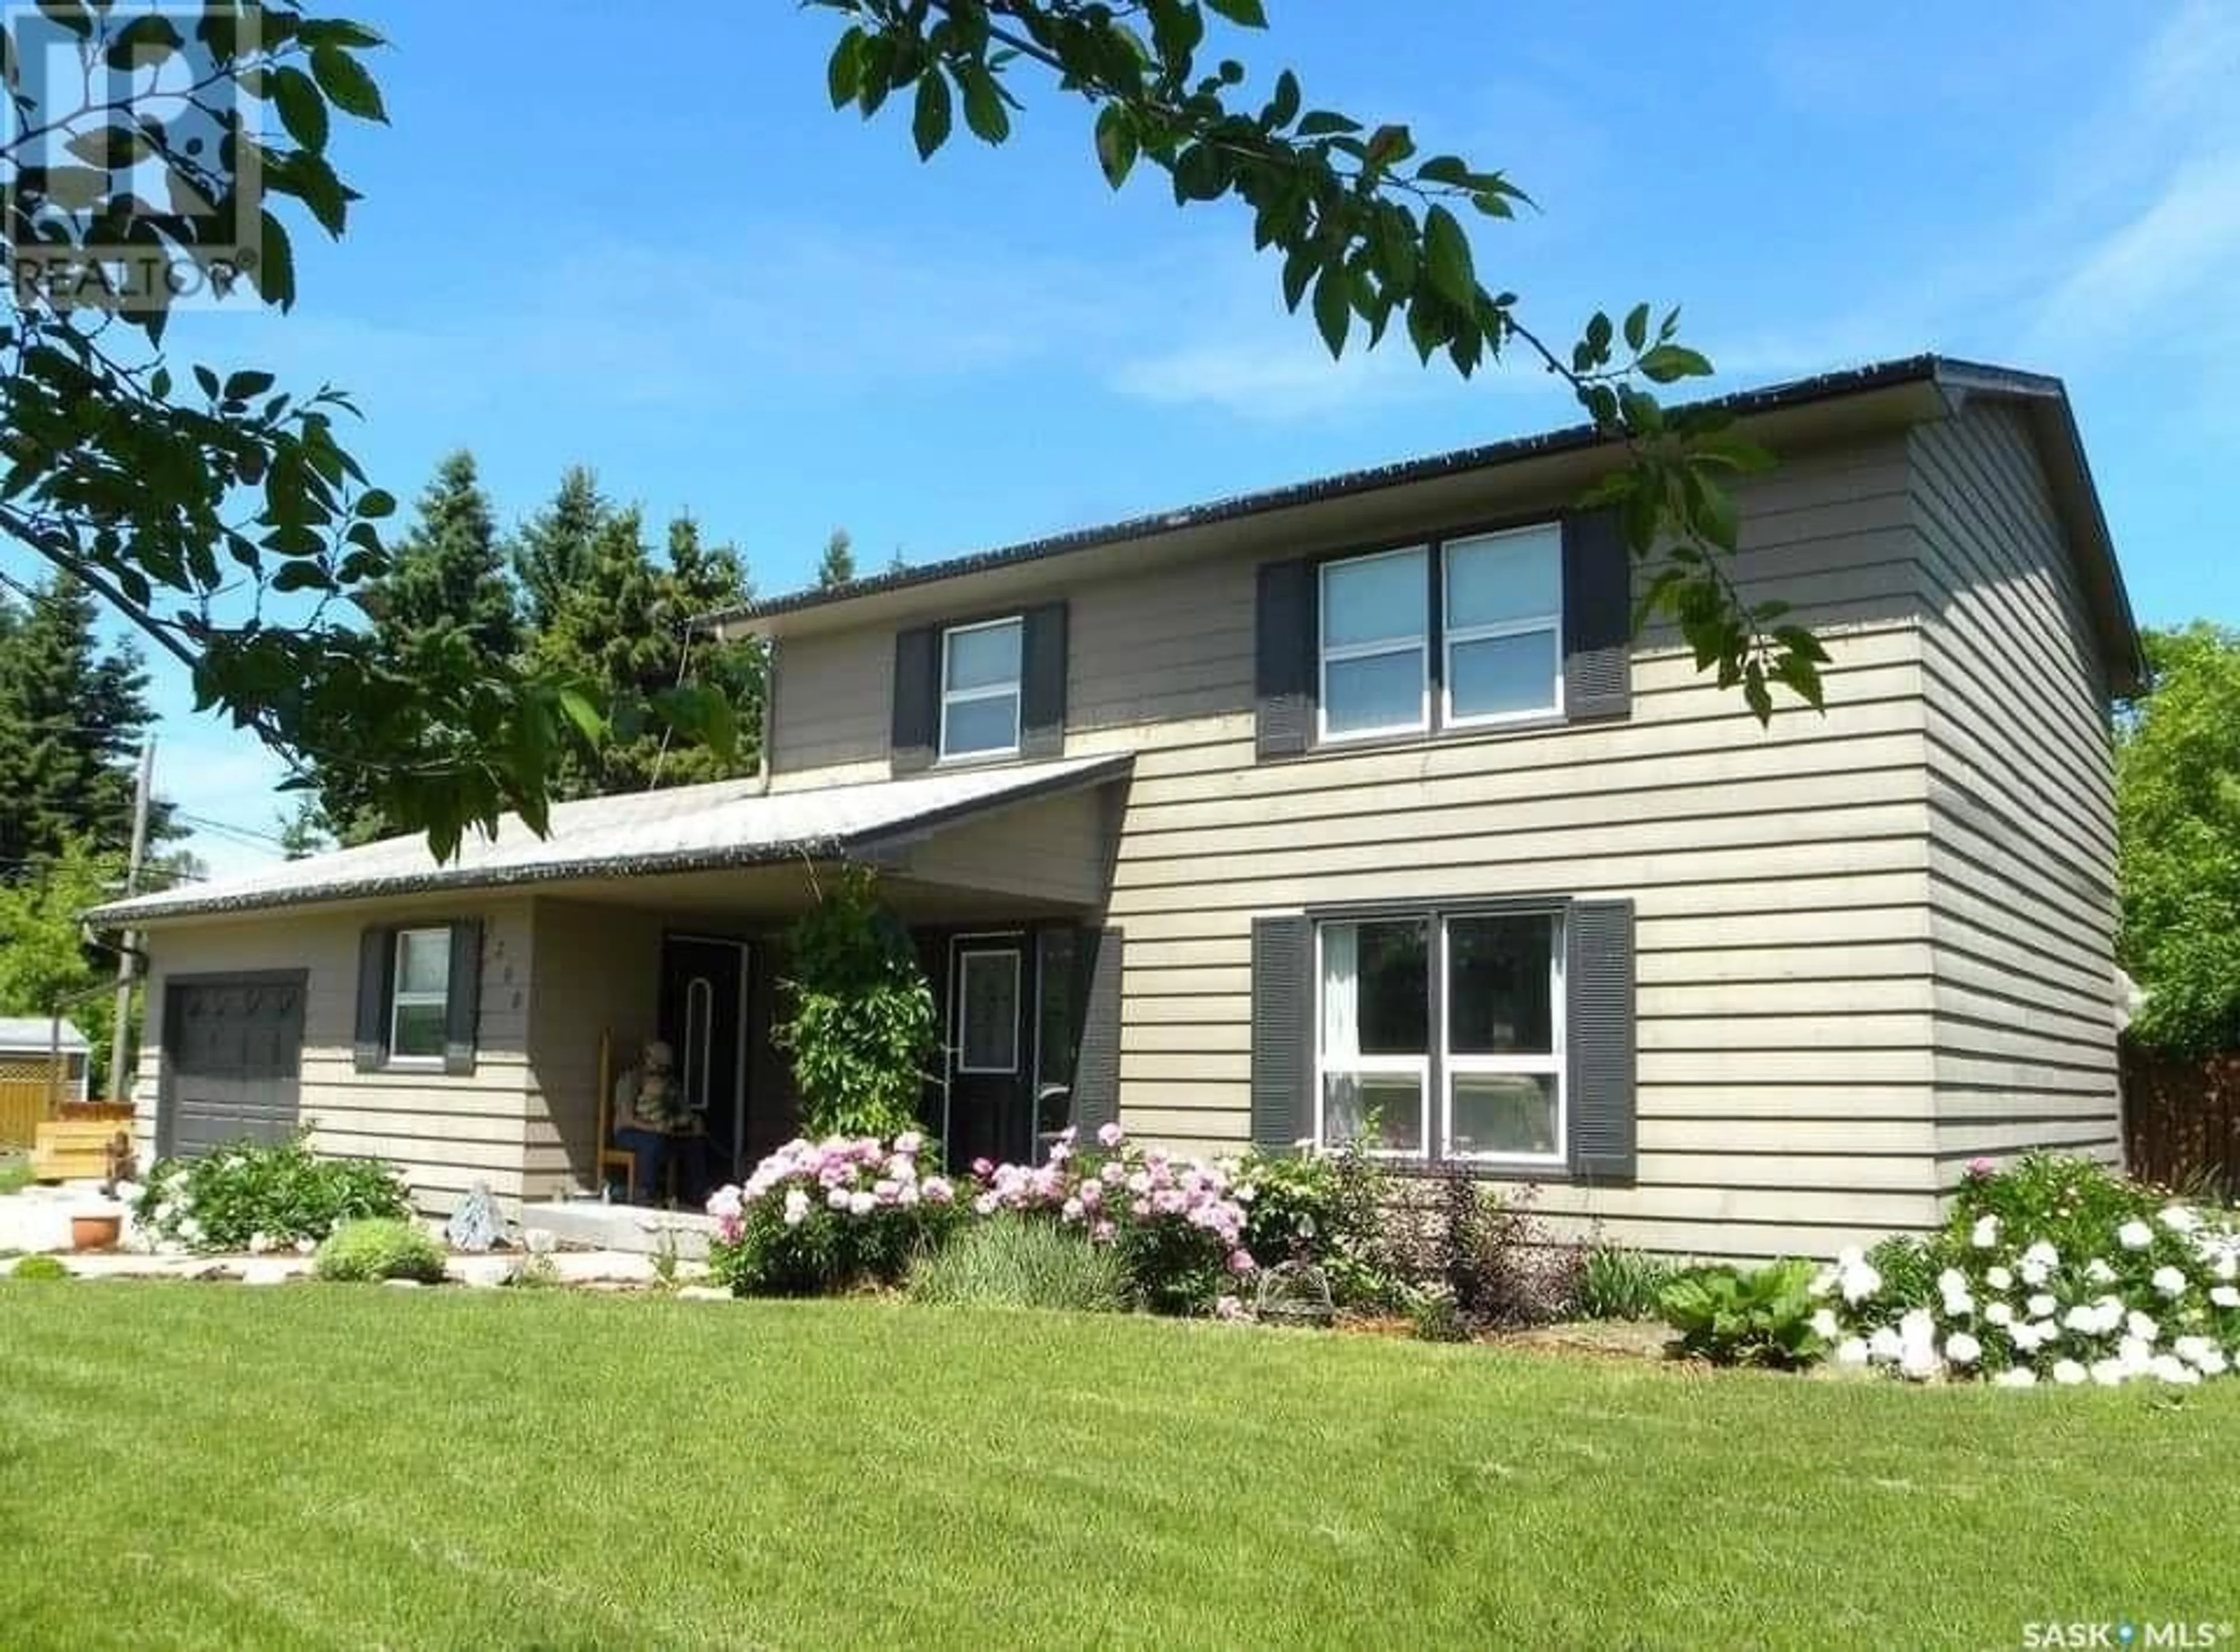 Home with vinyl exterior material for 1208 11th AVENUE, Humboldt Saskatchewan S0K2A0